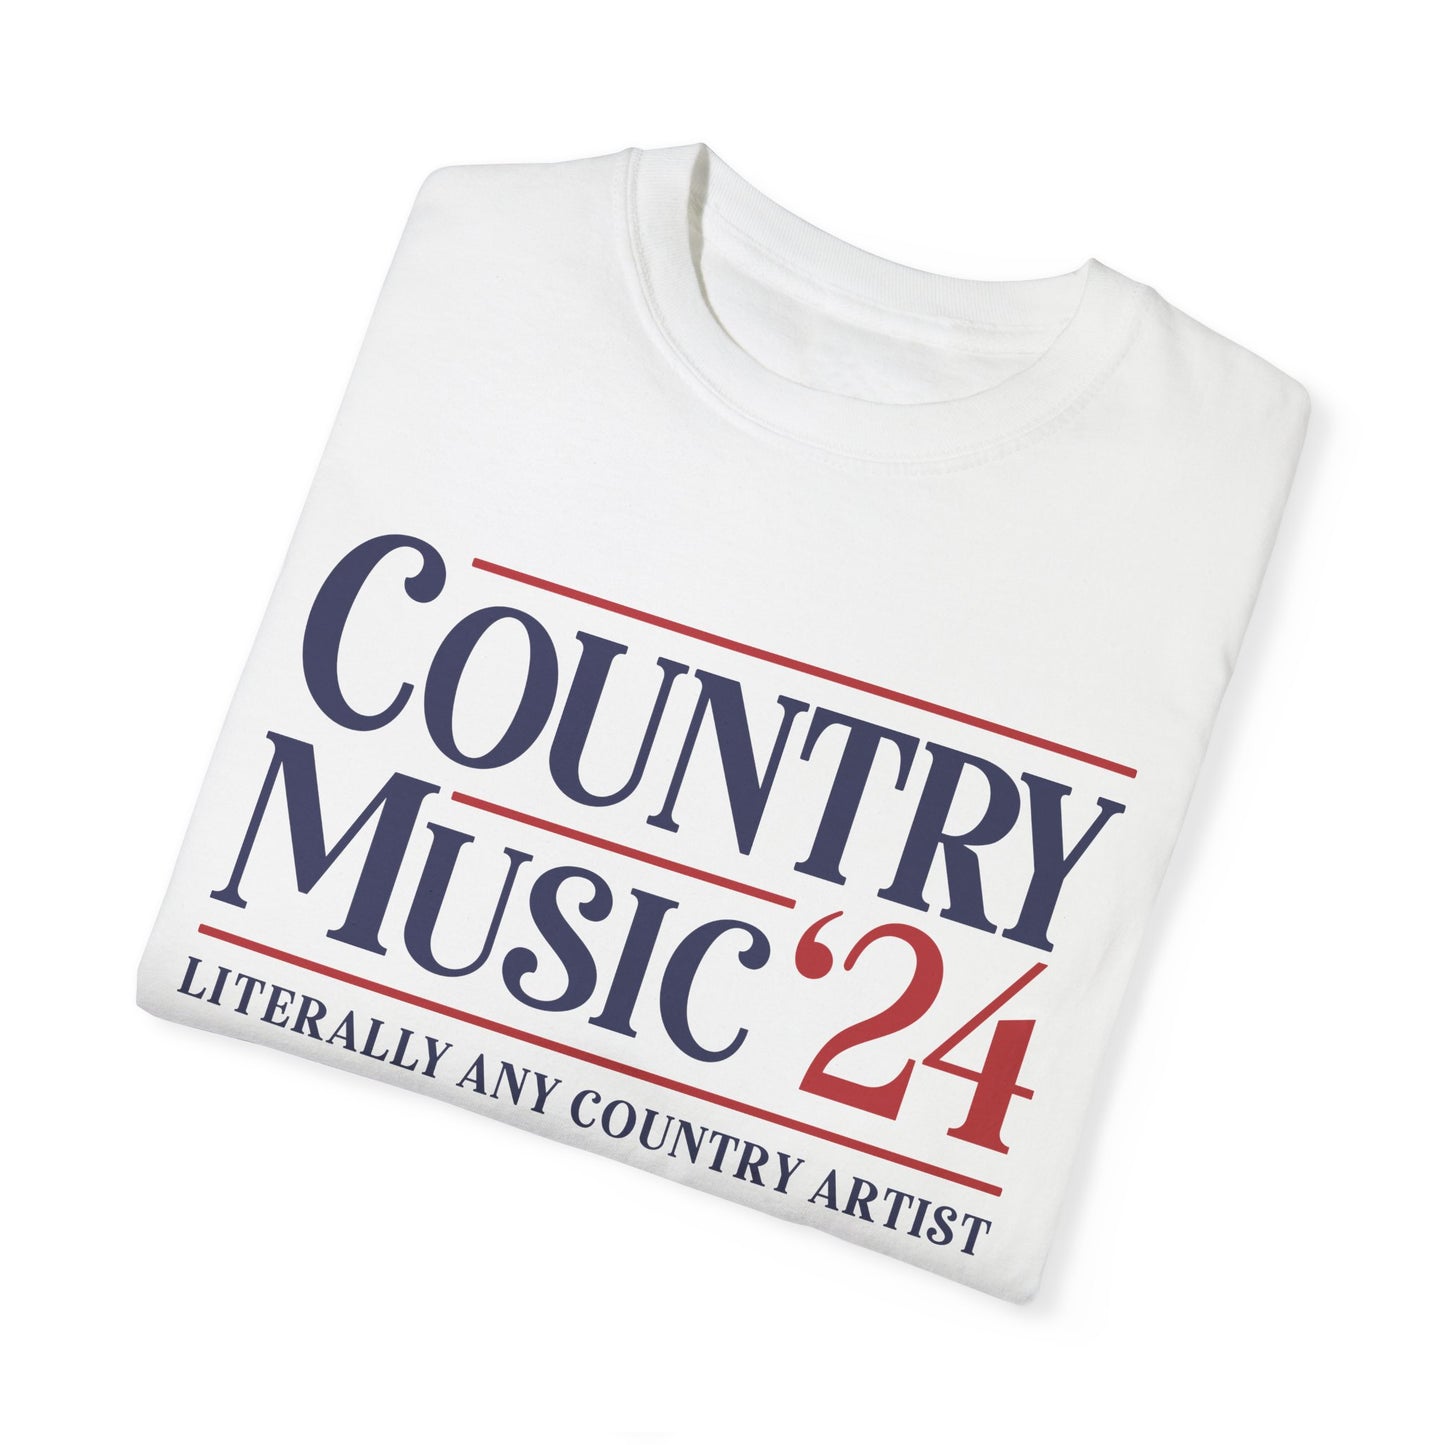 Country Music '24 T-shirt